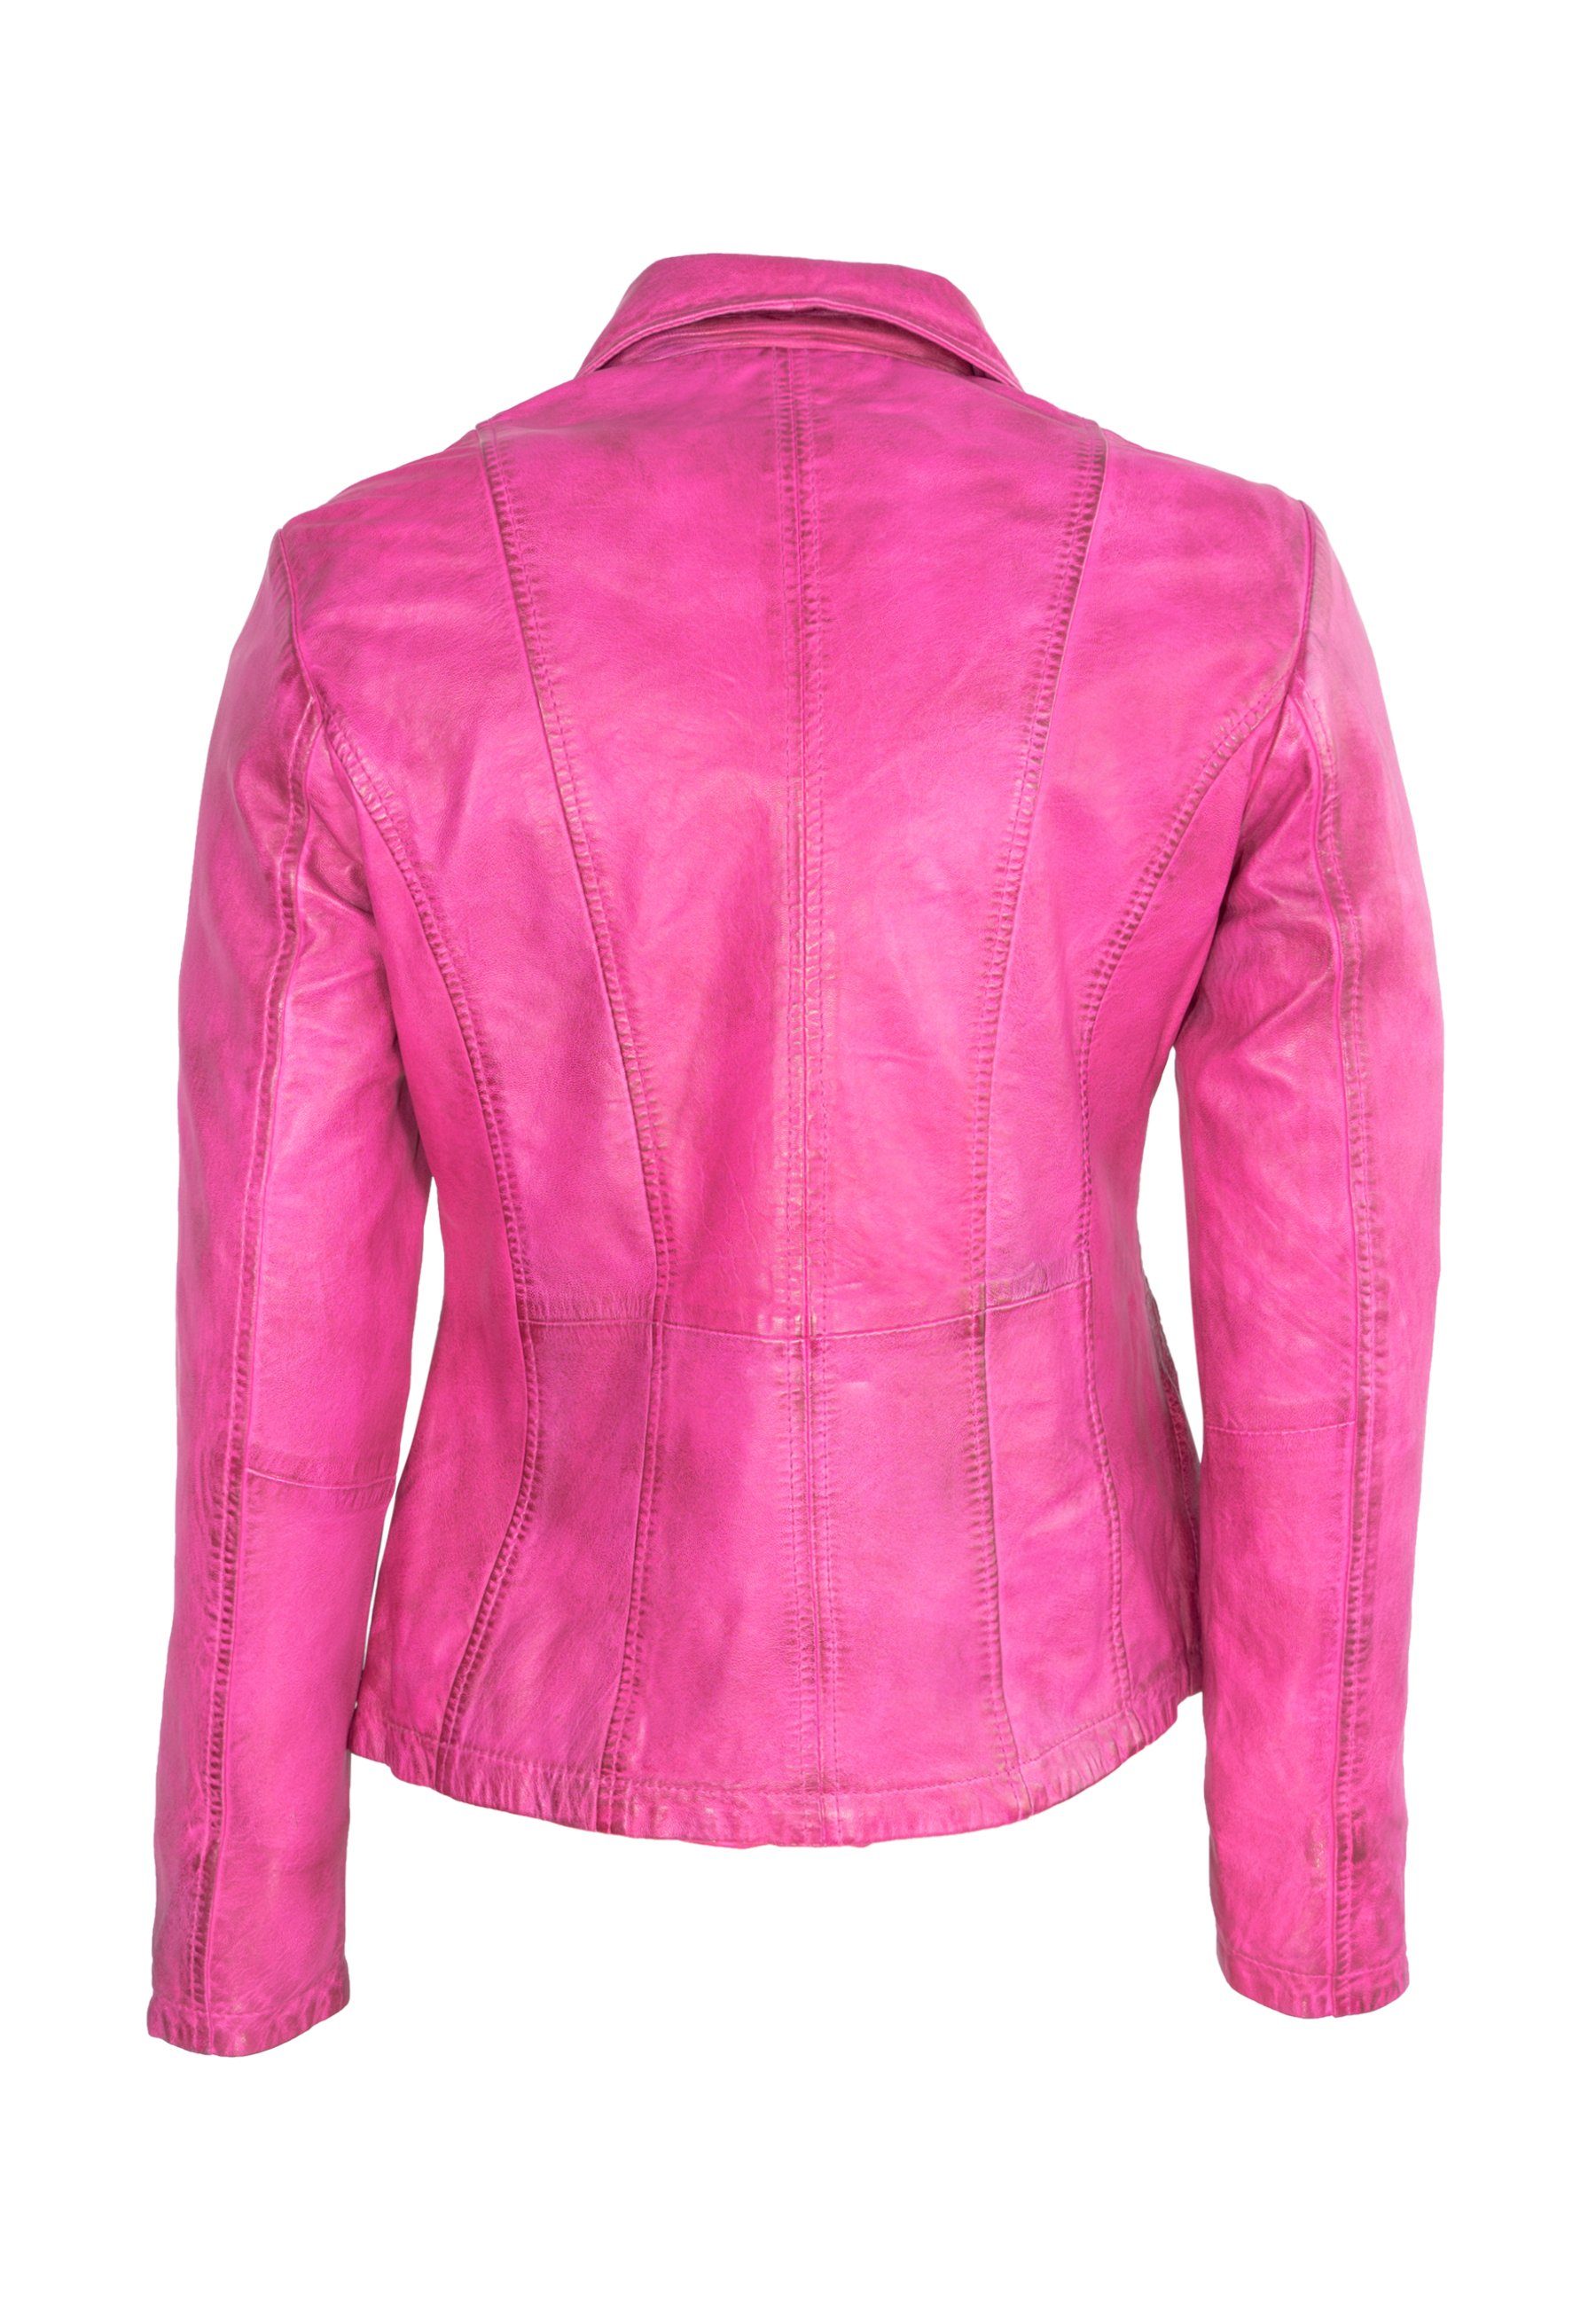 Lolus Lederjacke Clara shocking pink Leder aus Klassisch elegante Damen Lederjacke Lammnappa weichem